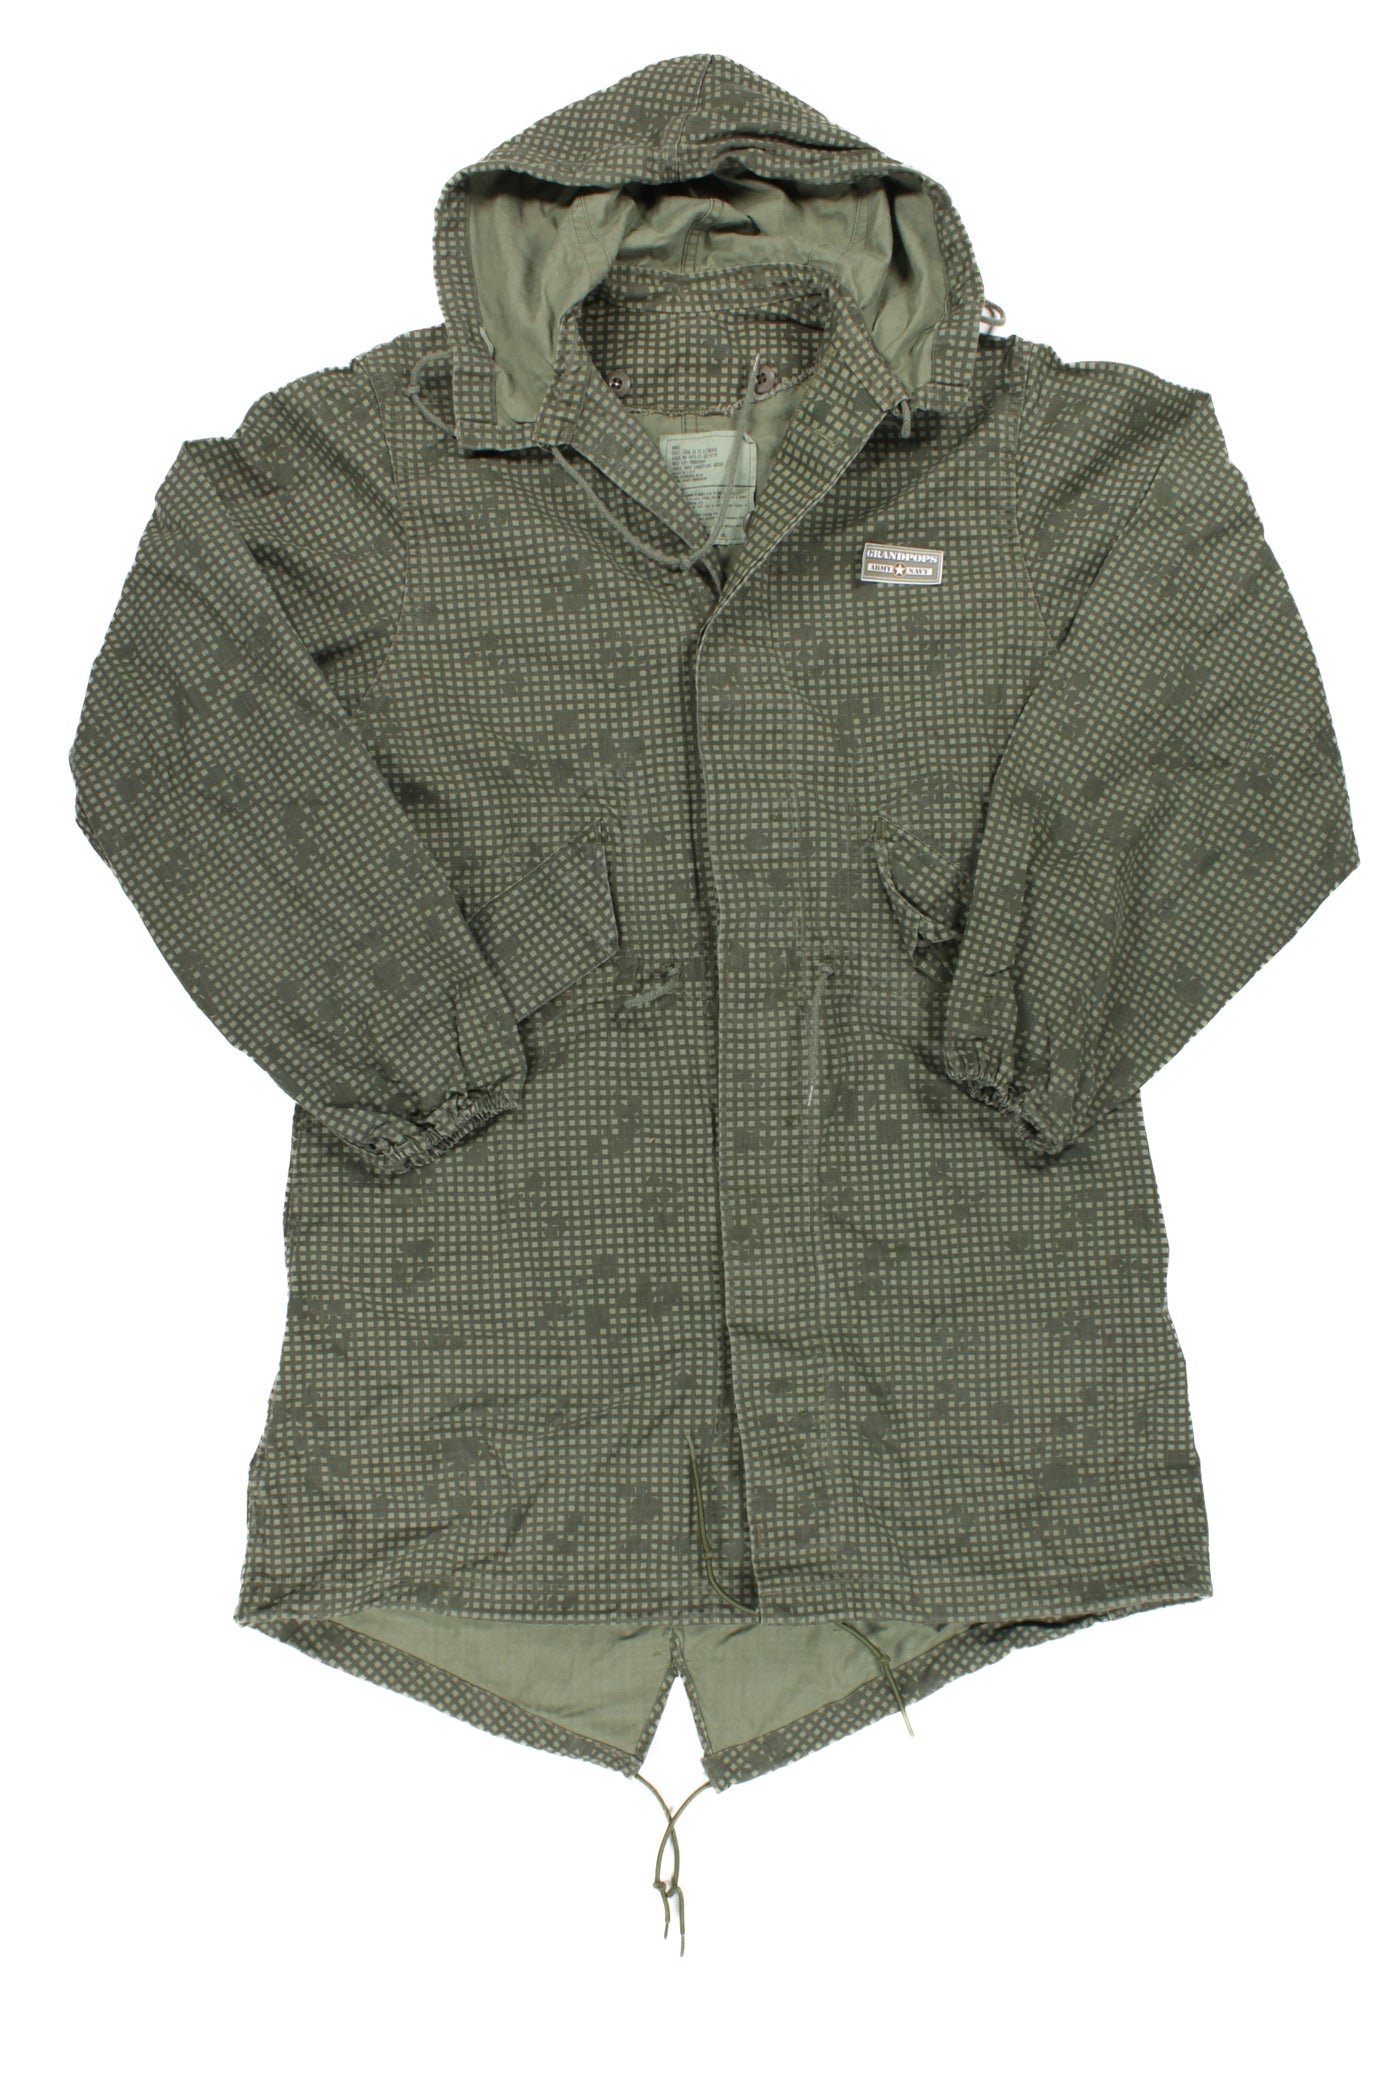 Desert Night Camo Tactical Long Sleeve Shirt Combat Pullover Hooded Hoodie  Coat